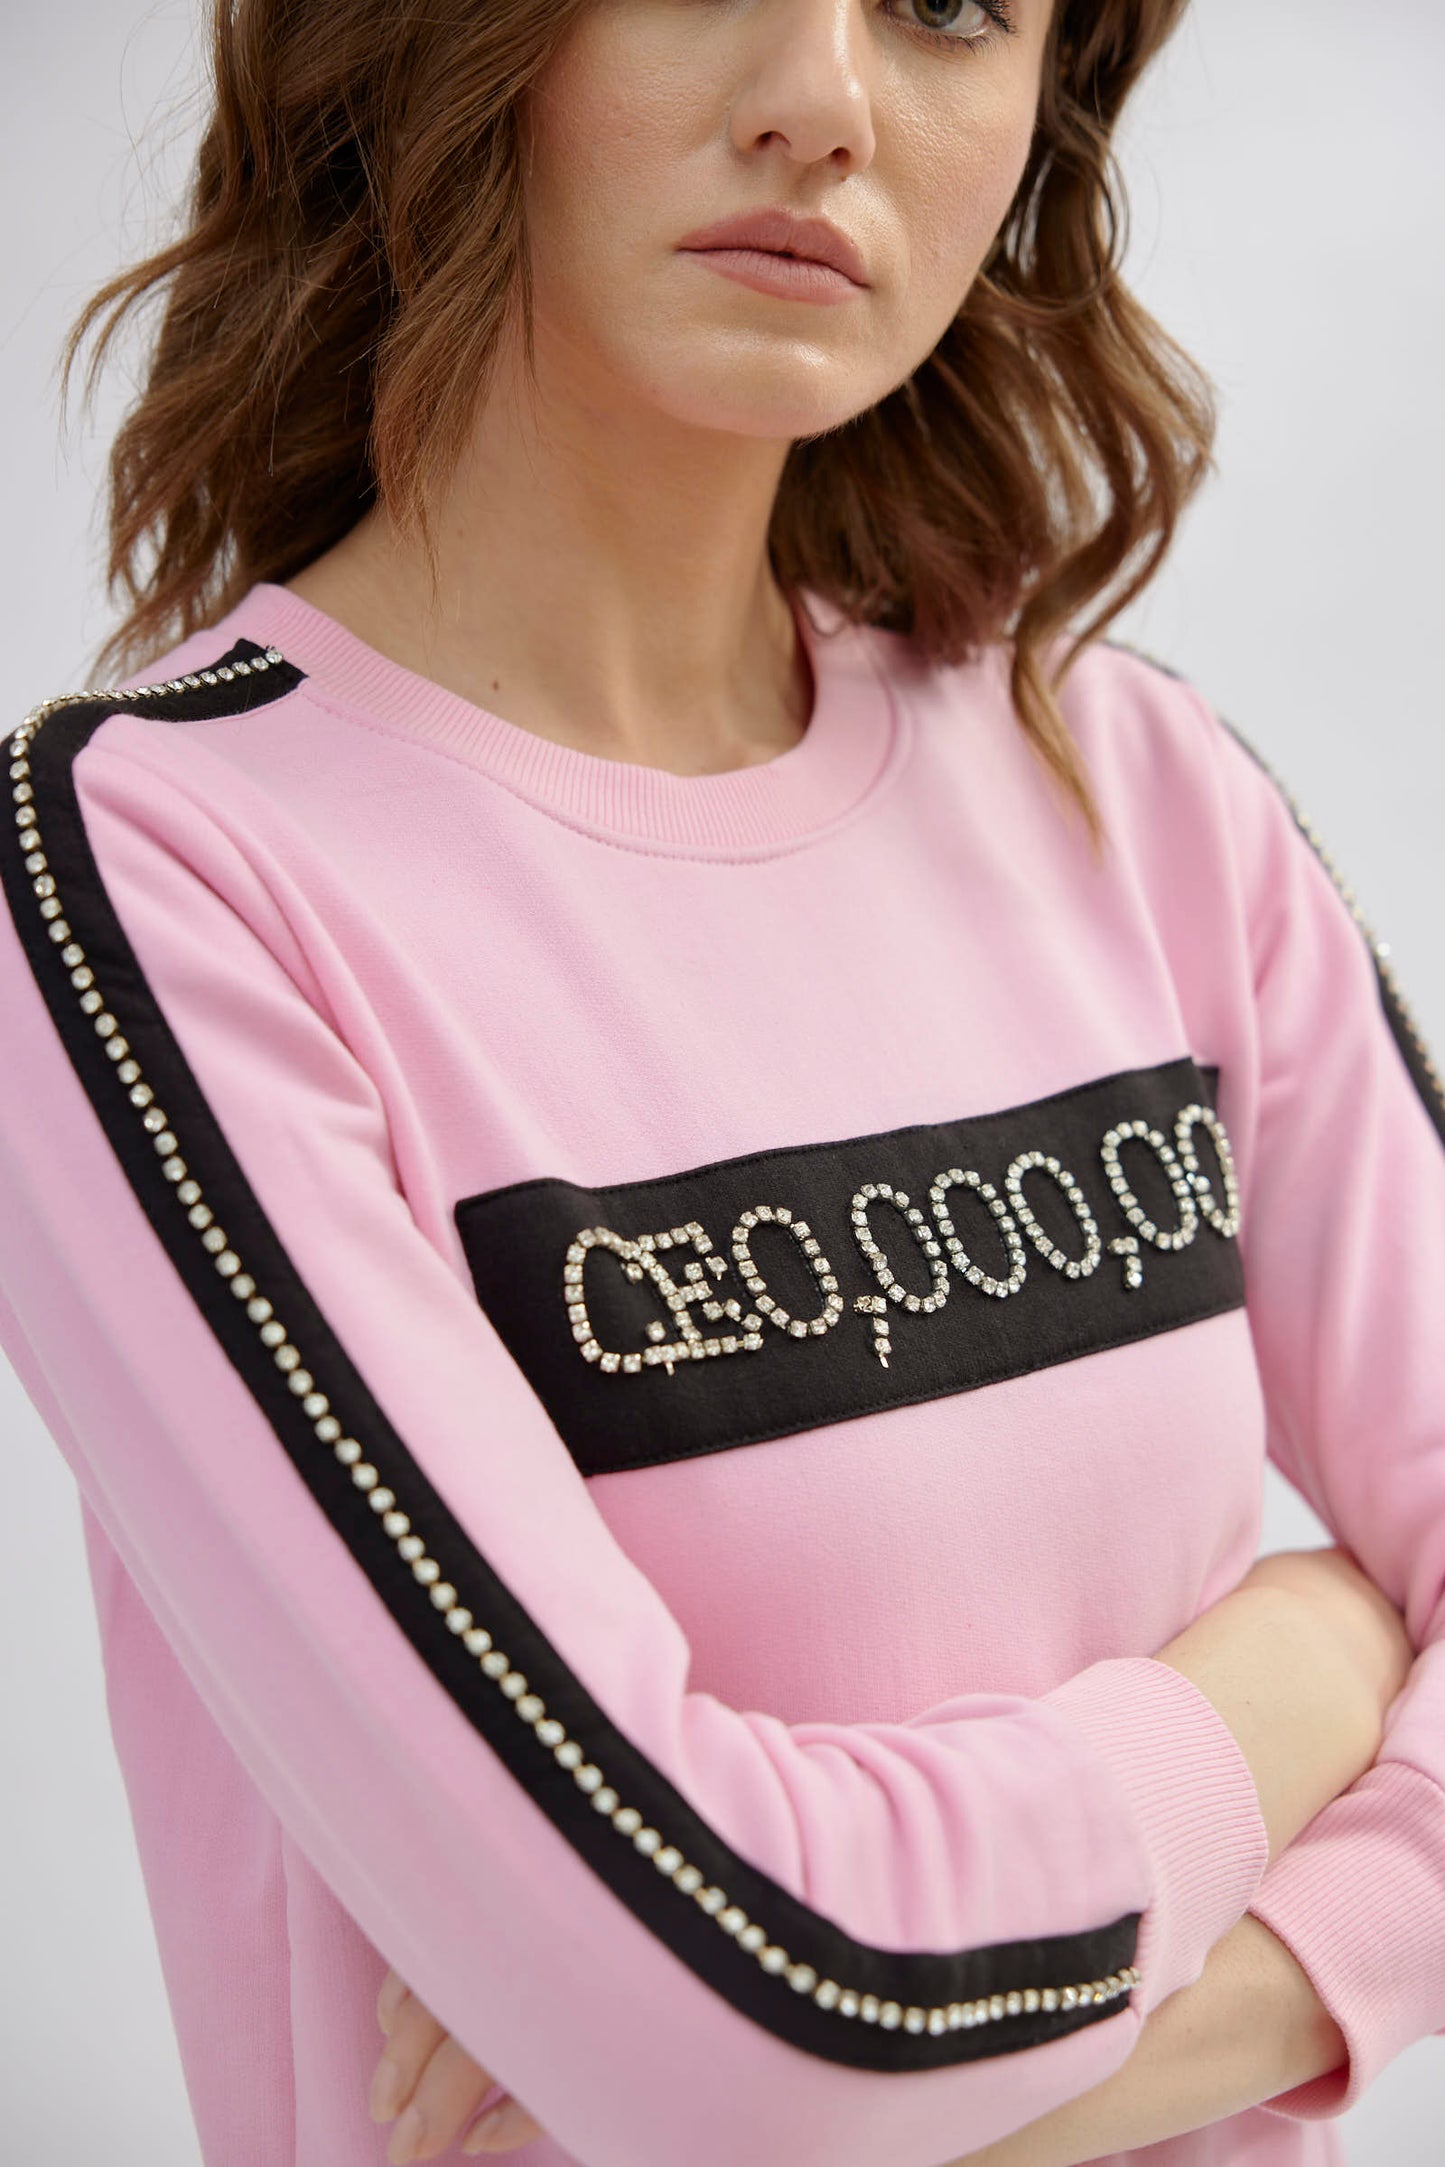 CEO Sweatshirt Set (Women) (Pink) | MAIN CHARACTER